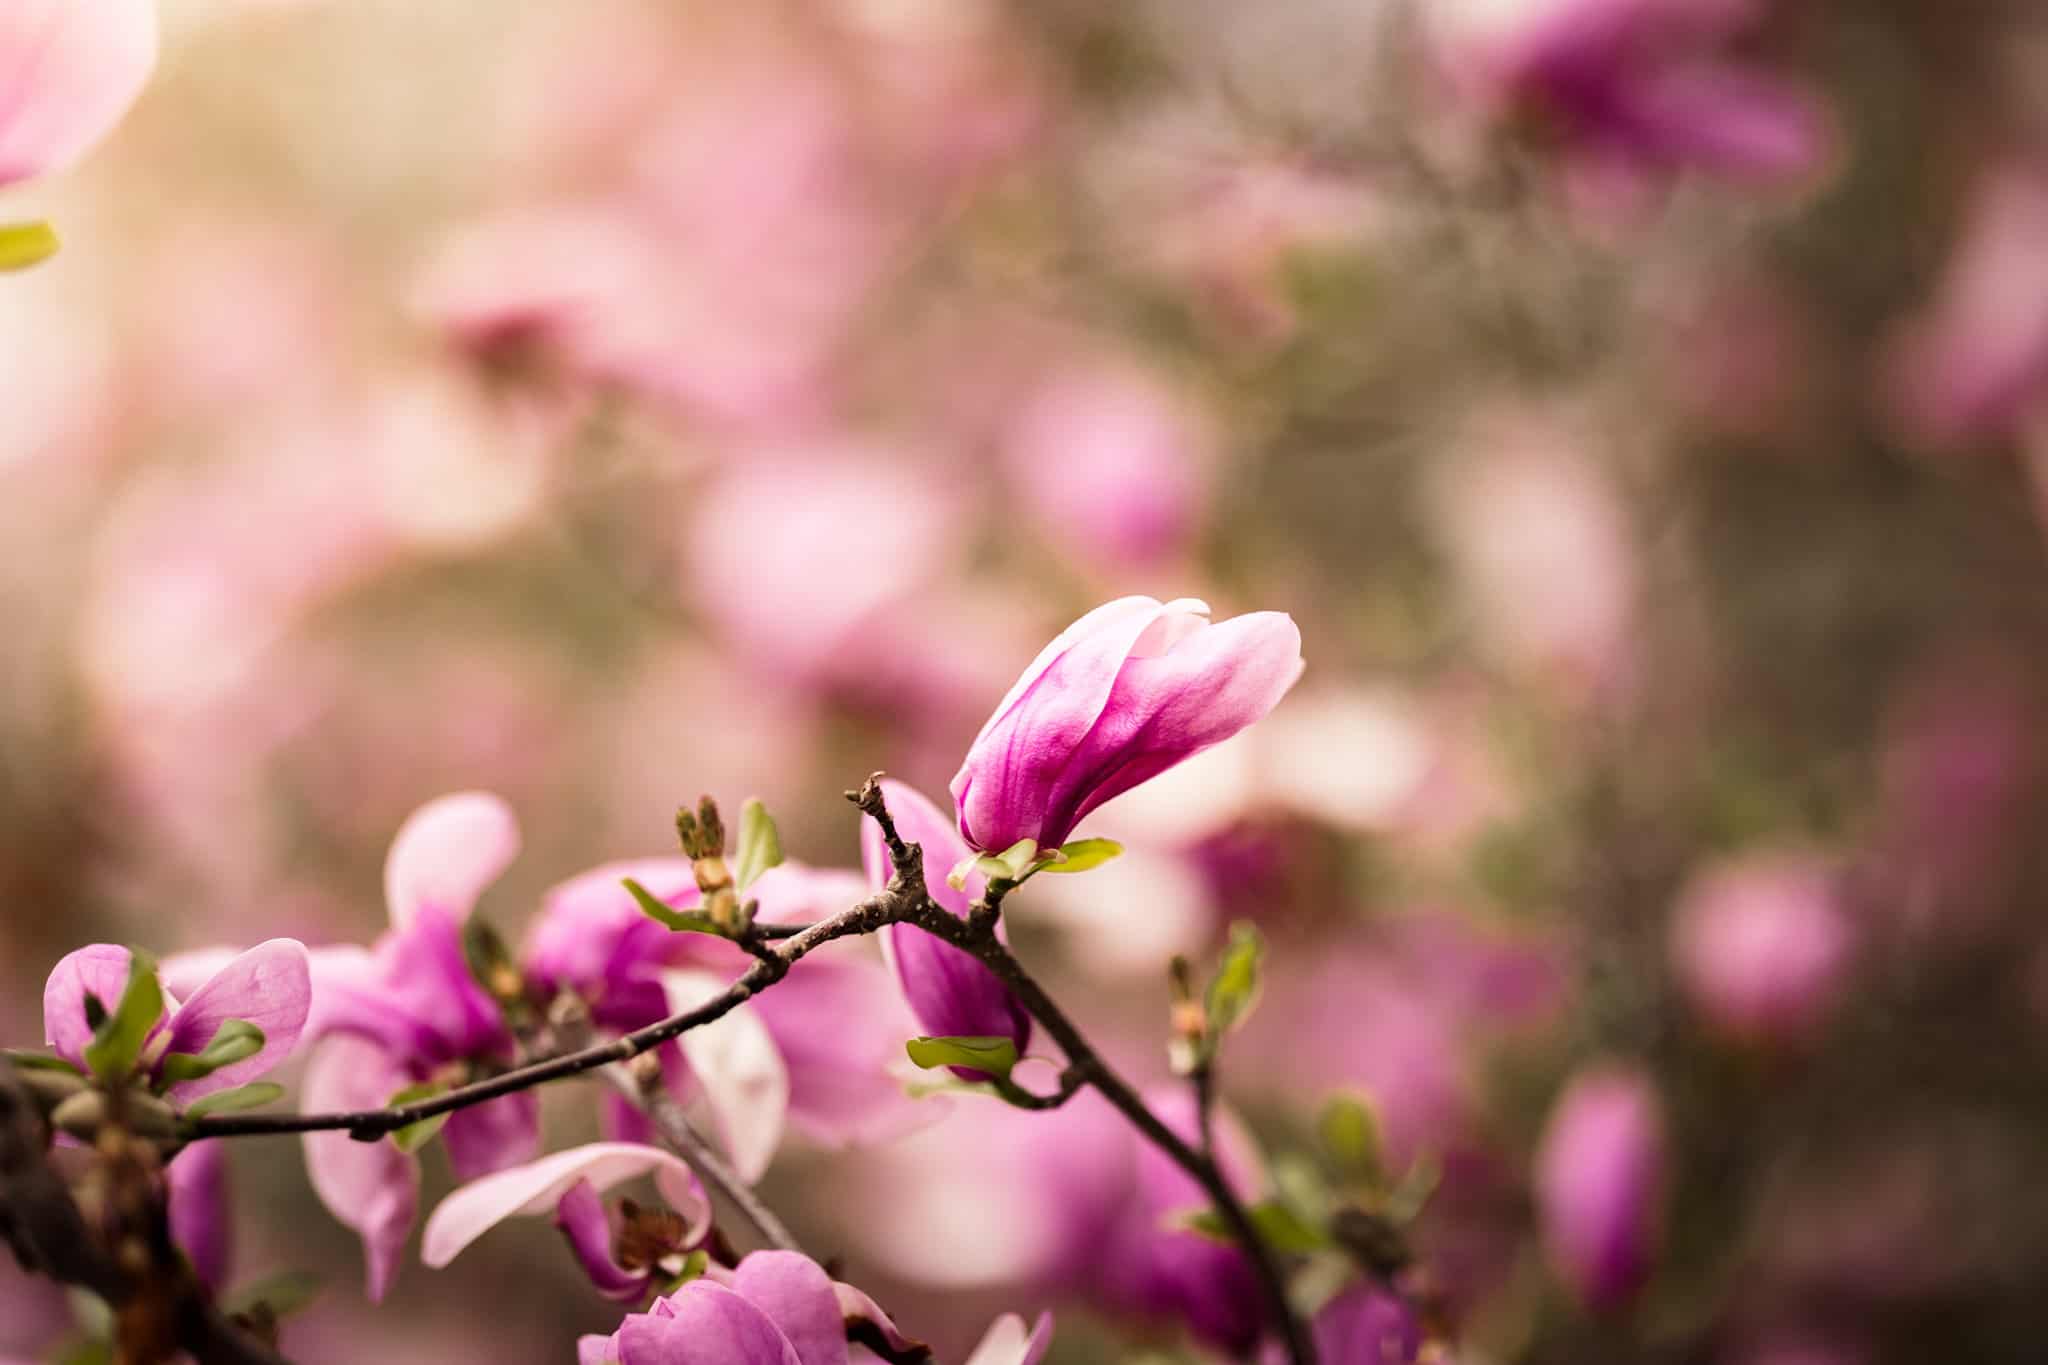 A young magnolia blossom